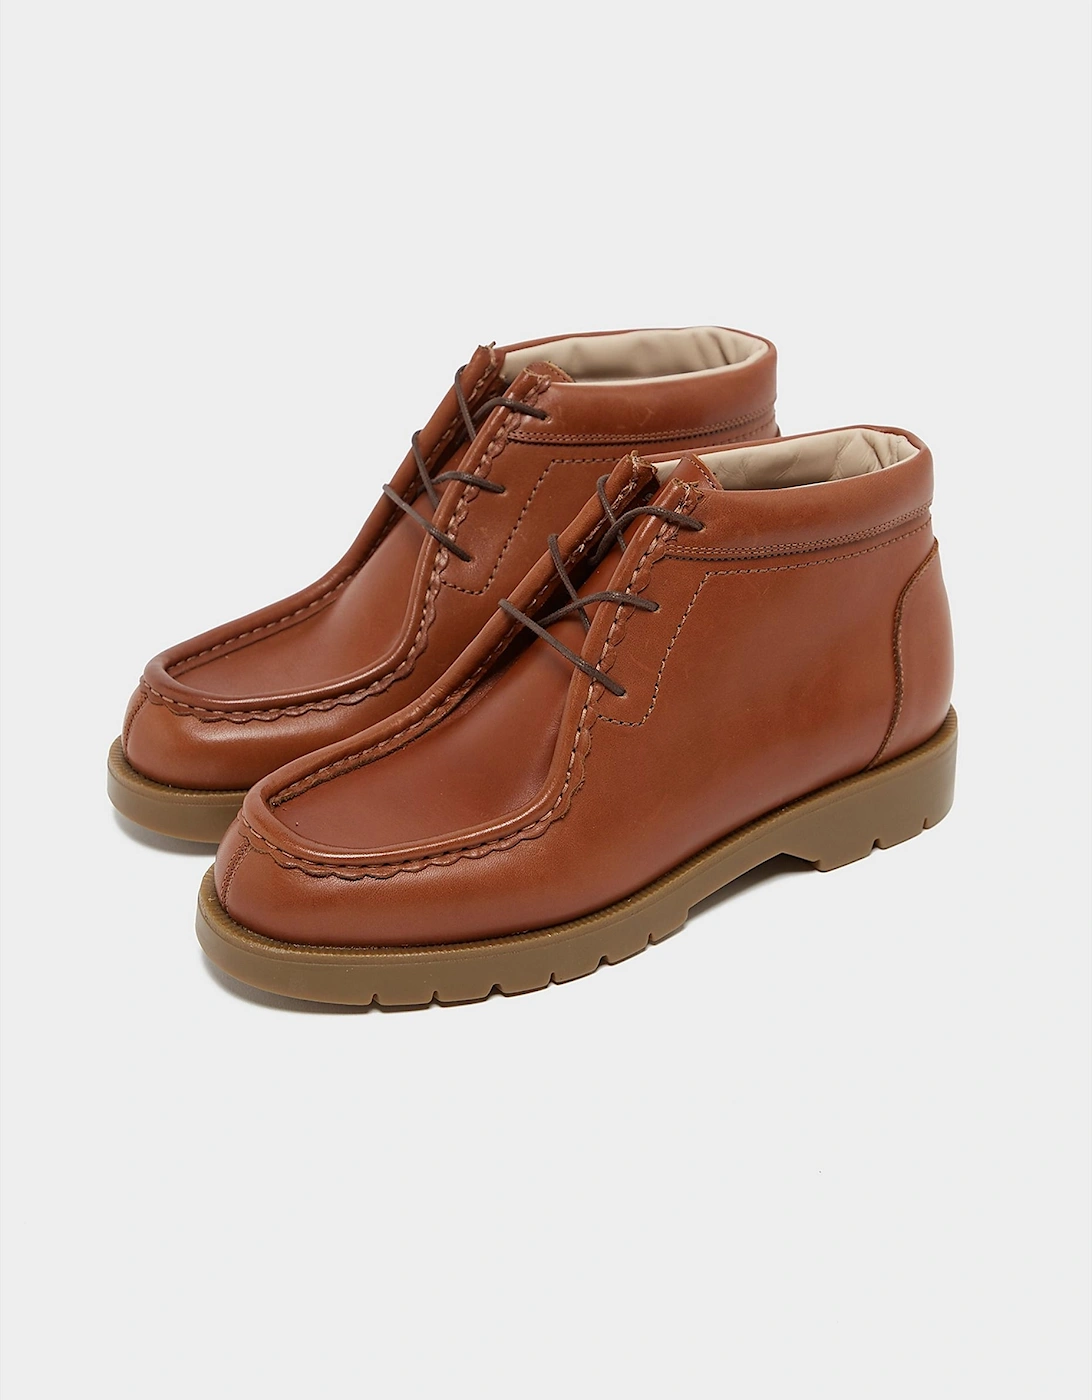 Mens Parure Leather Eco-Friendly Boots